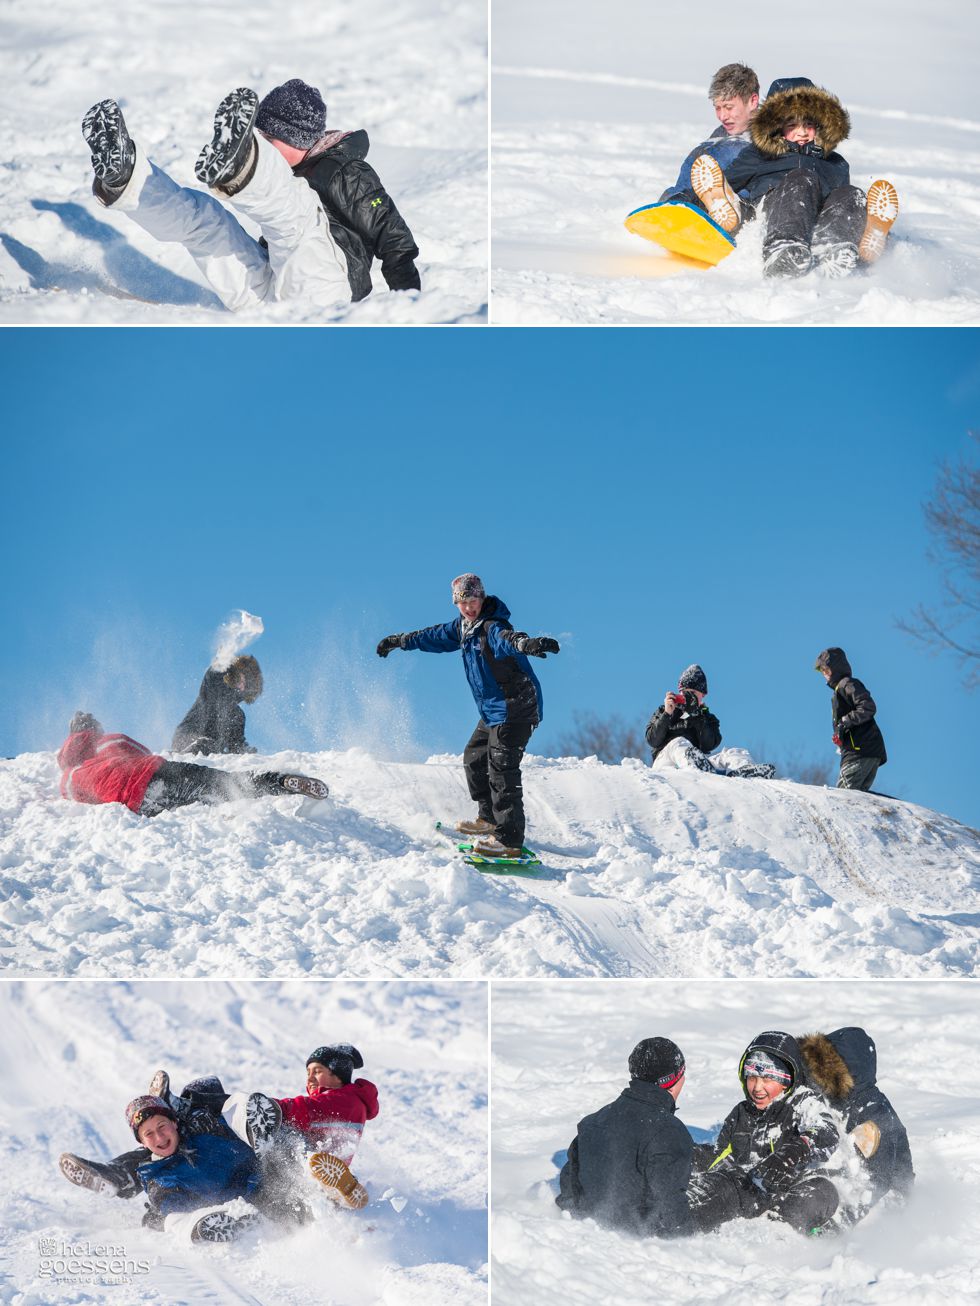 Boys having fun in the snow